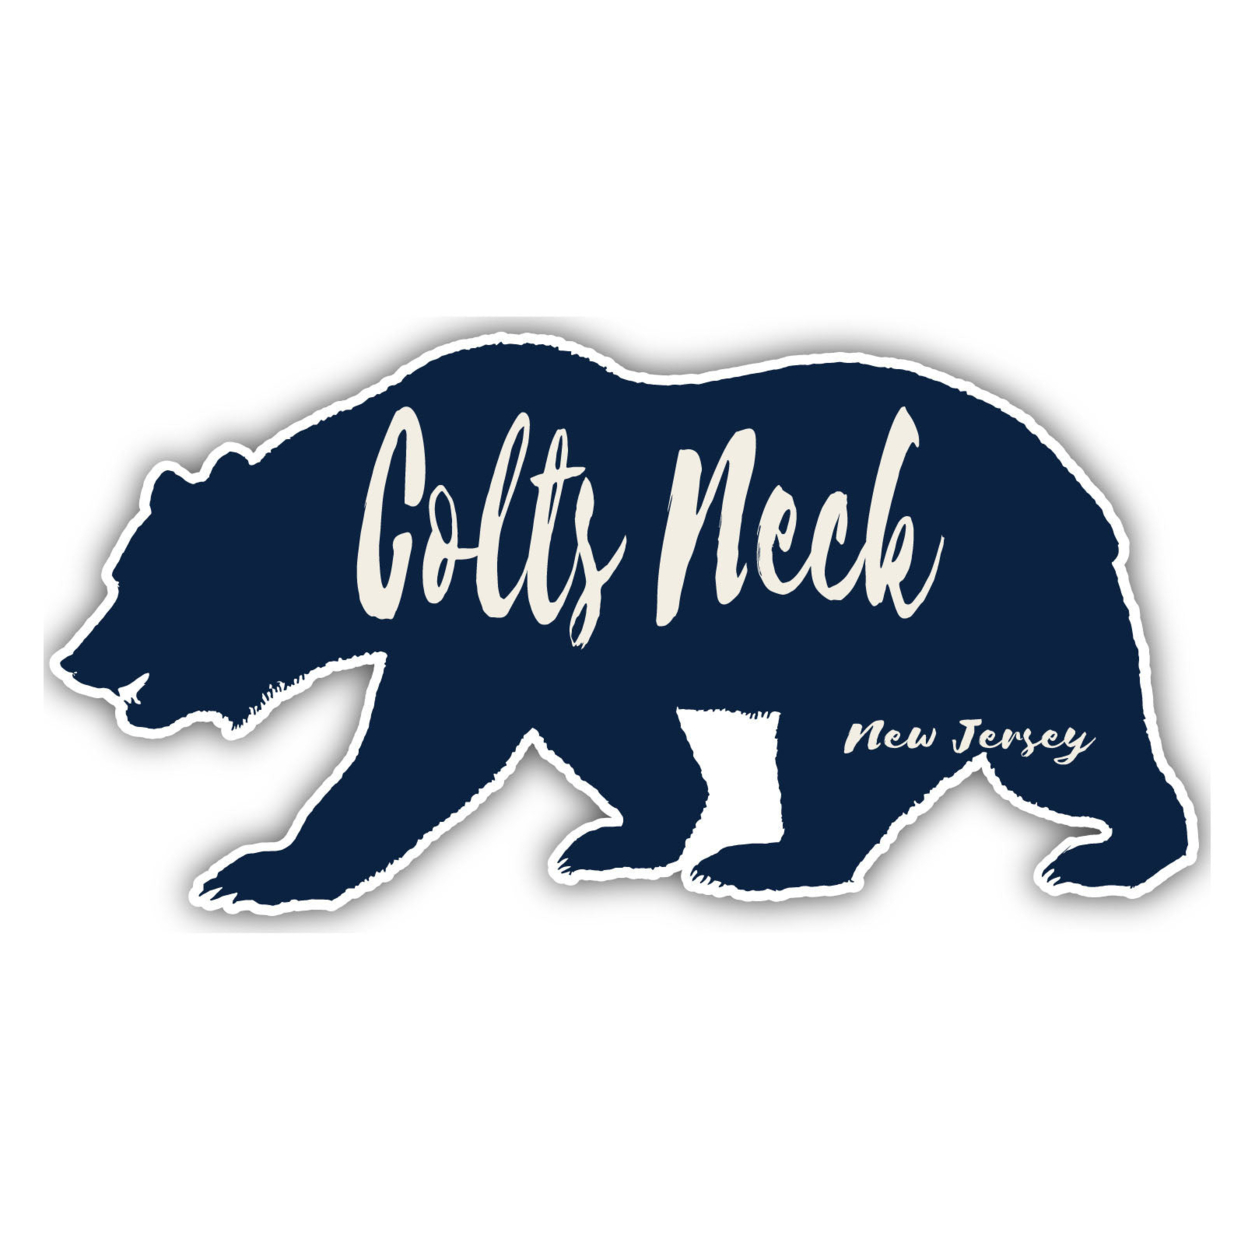 Colts Neck New Jersey Souvenir Decorative Stickers (Choose Theme And Size) - Single Unit, 6-Inch, Bear